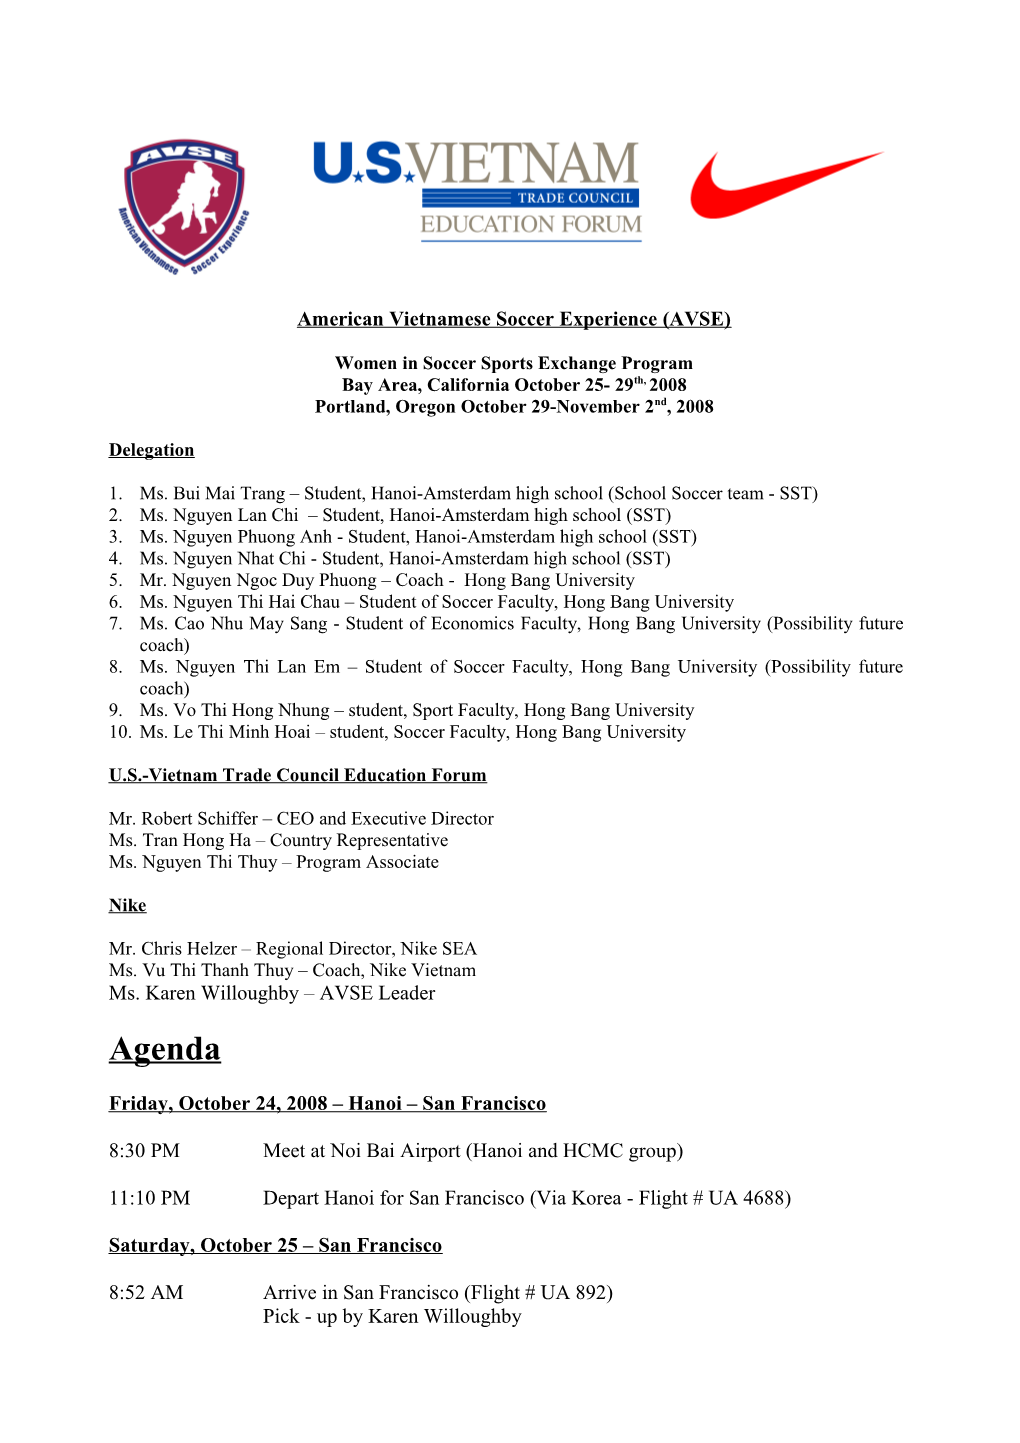 ANNOUNCEMENT: United States-Vietnam: Women in Soccer Sports Exchange Program